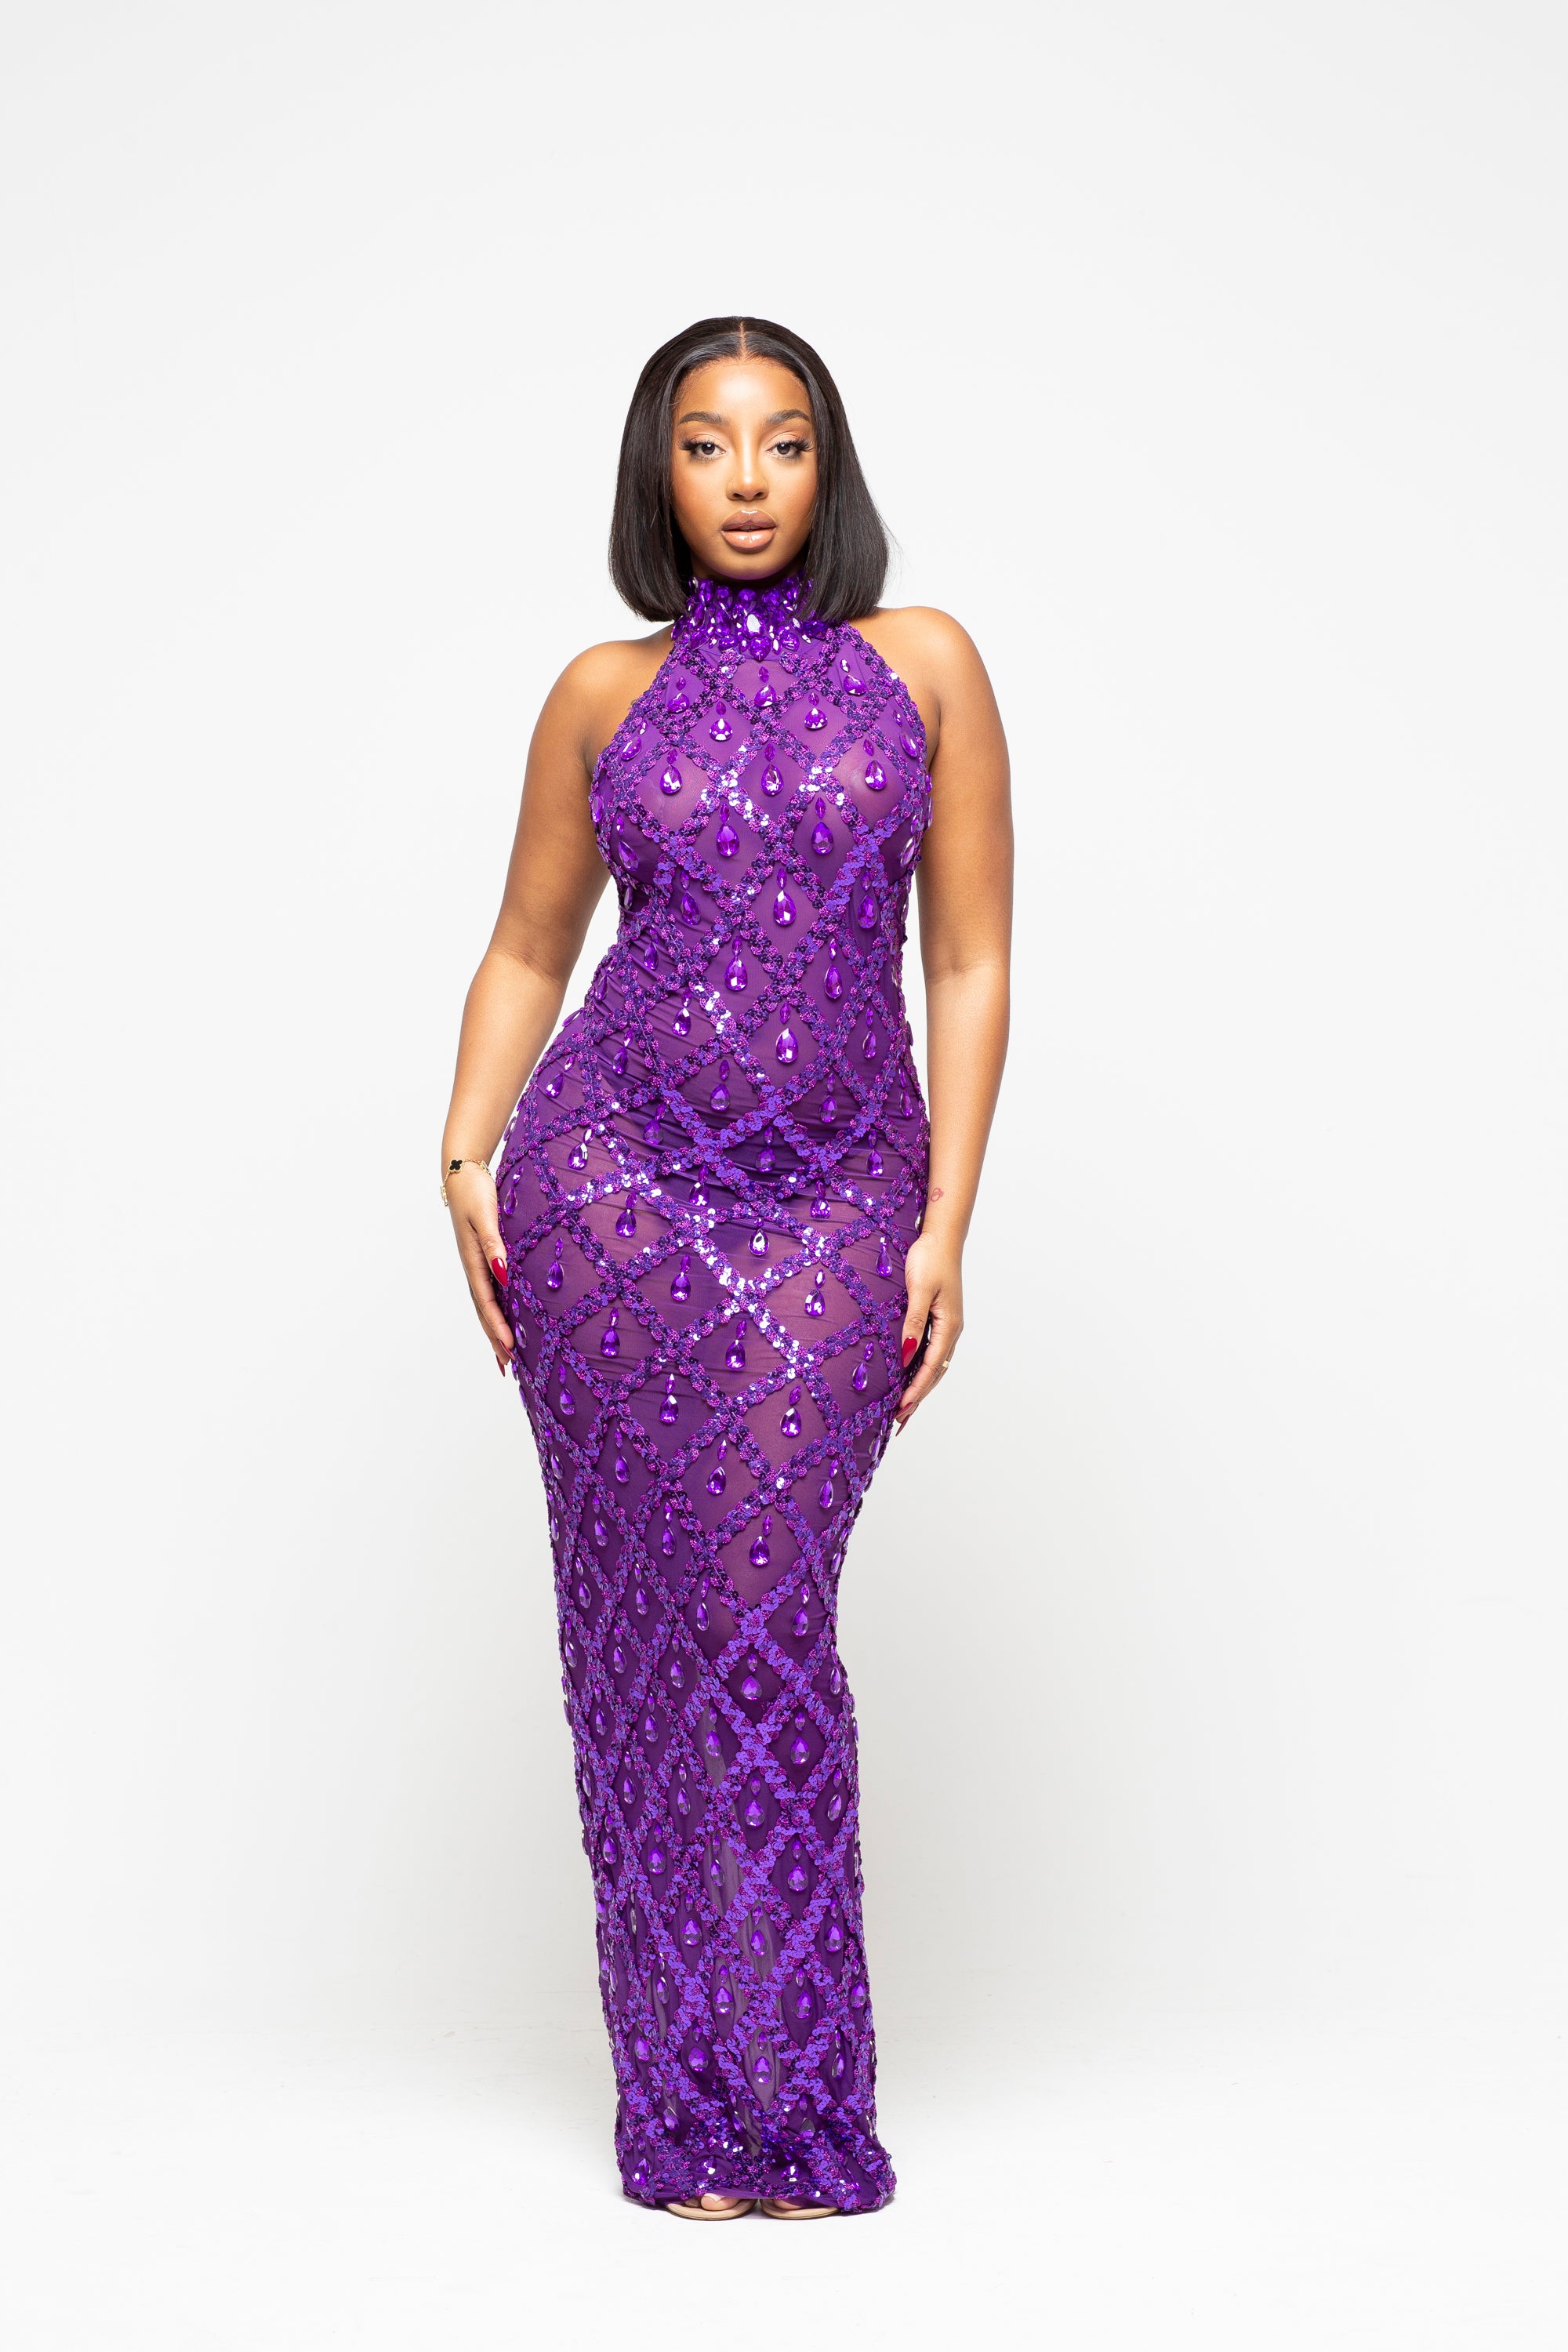 Diamond Maxi Dress Purple Limited Edition Pre-Order